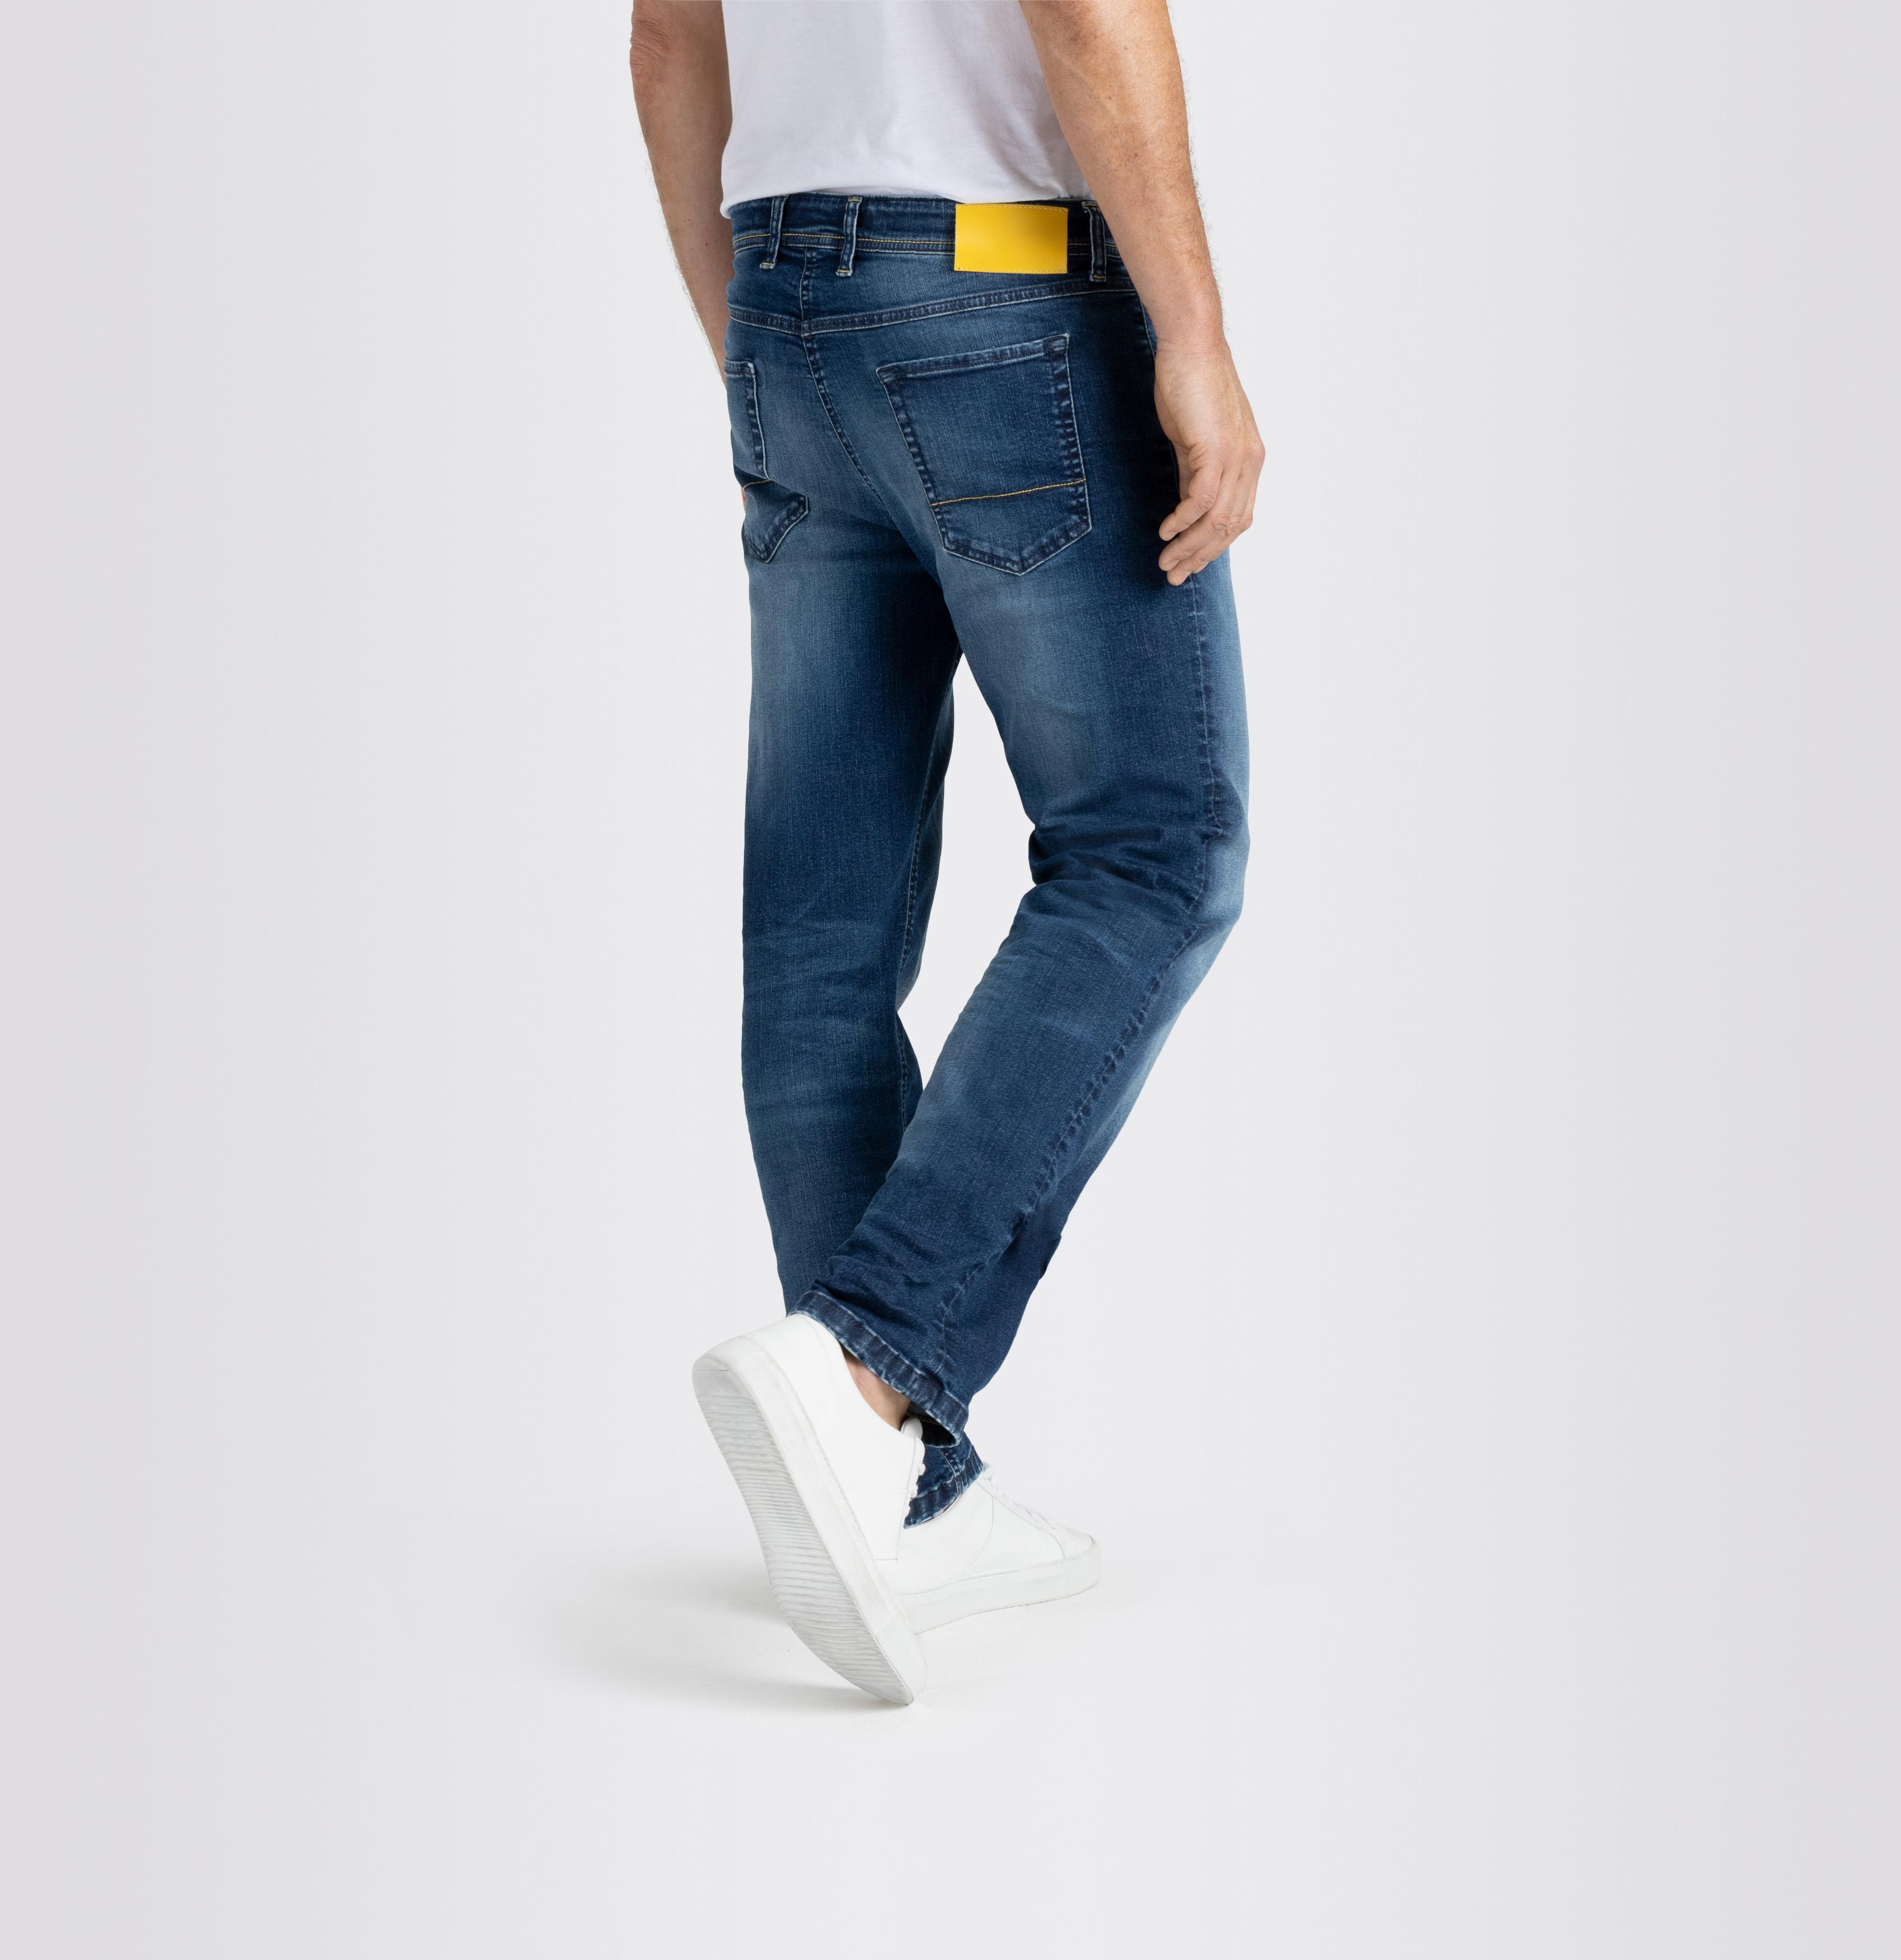 MAC blue FI | Men Jeans - Macflexx, Macflexx, Pants, H552 Shop